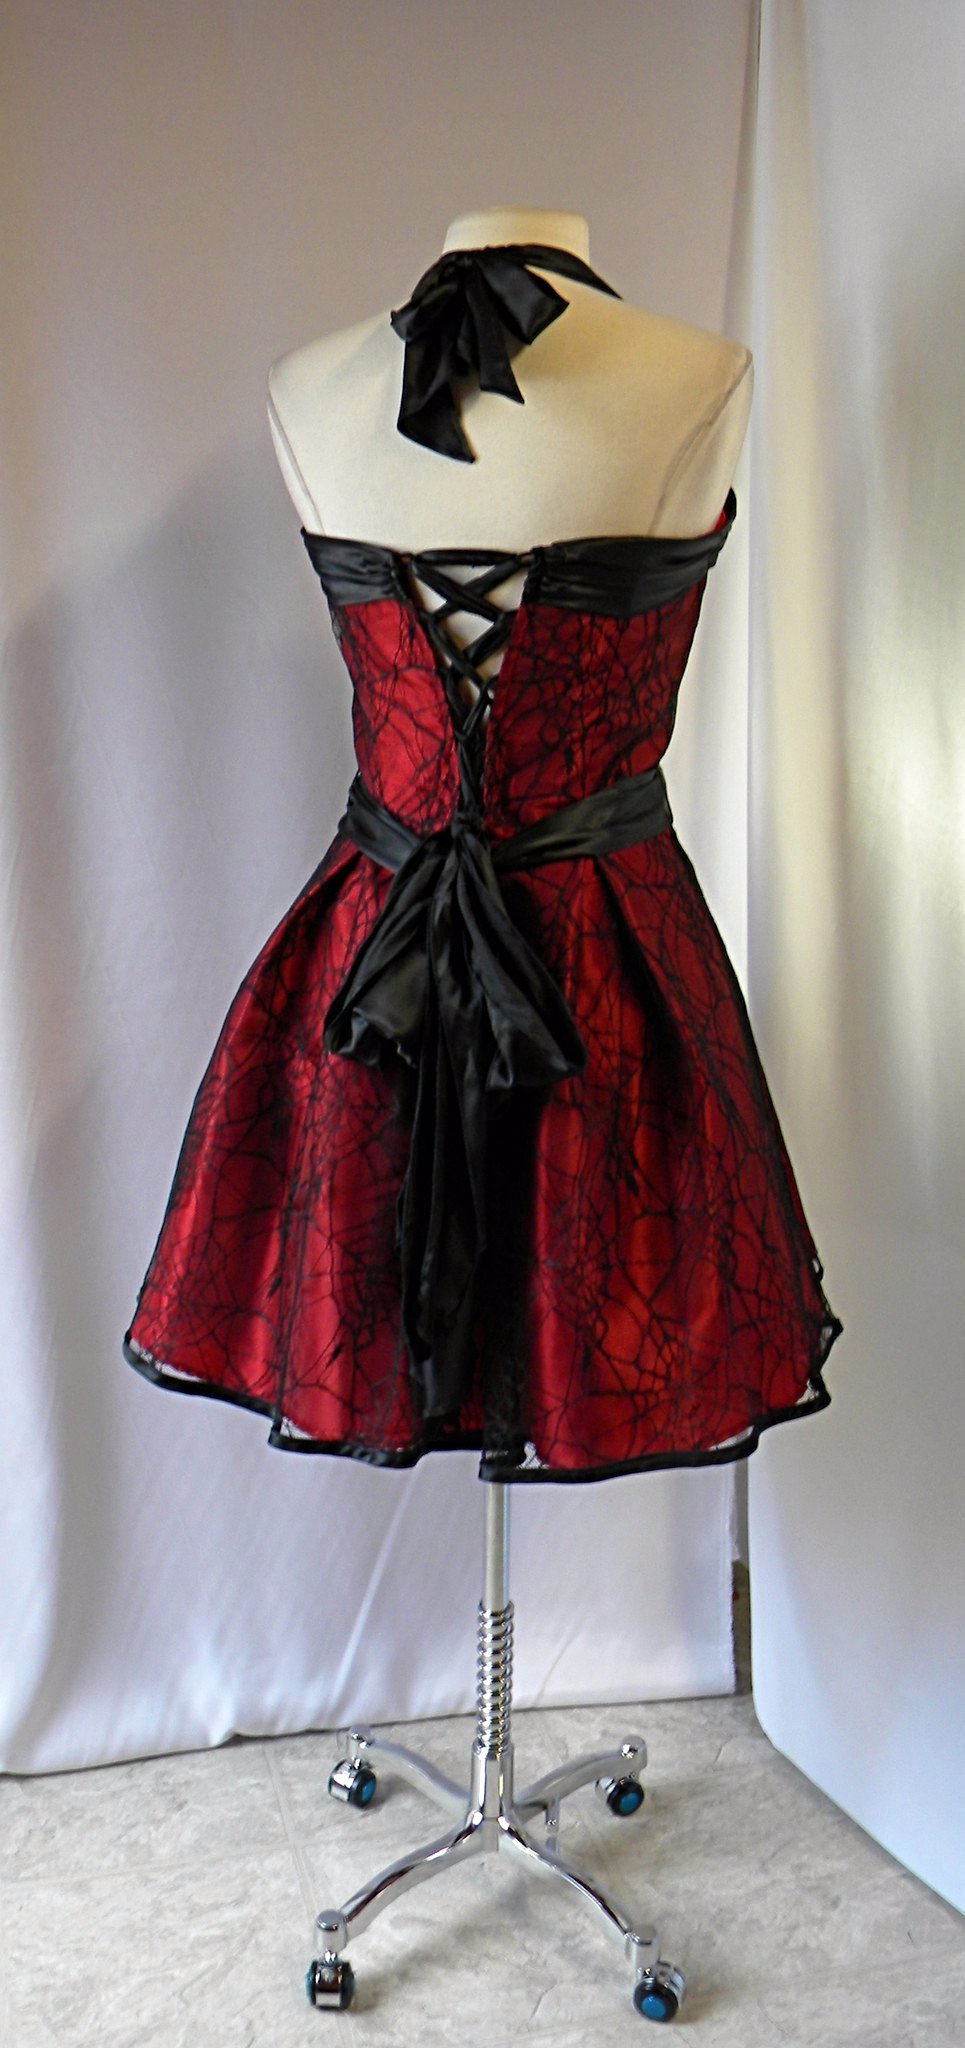 Creepy Semi Formal Red And Black – Erica's Creative Cavalcade